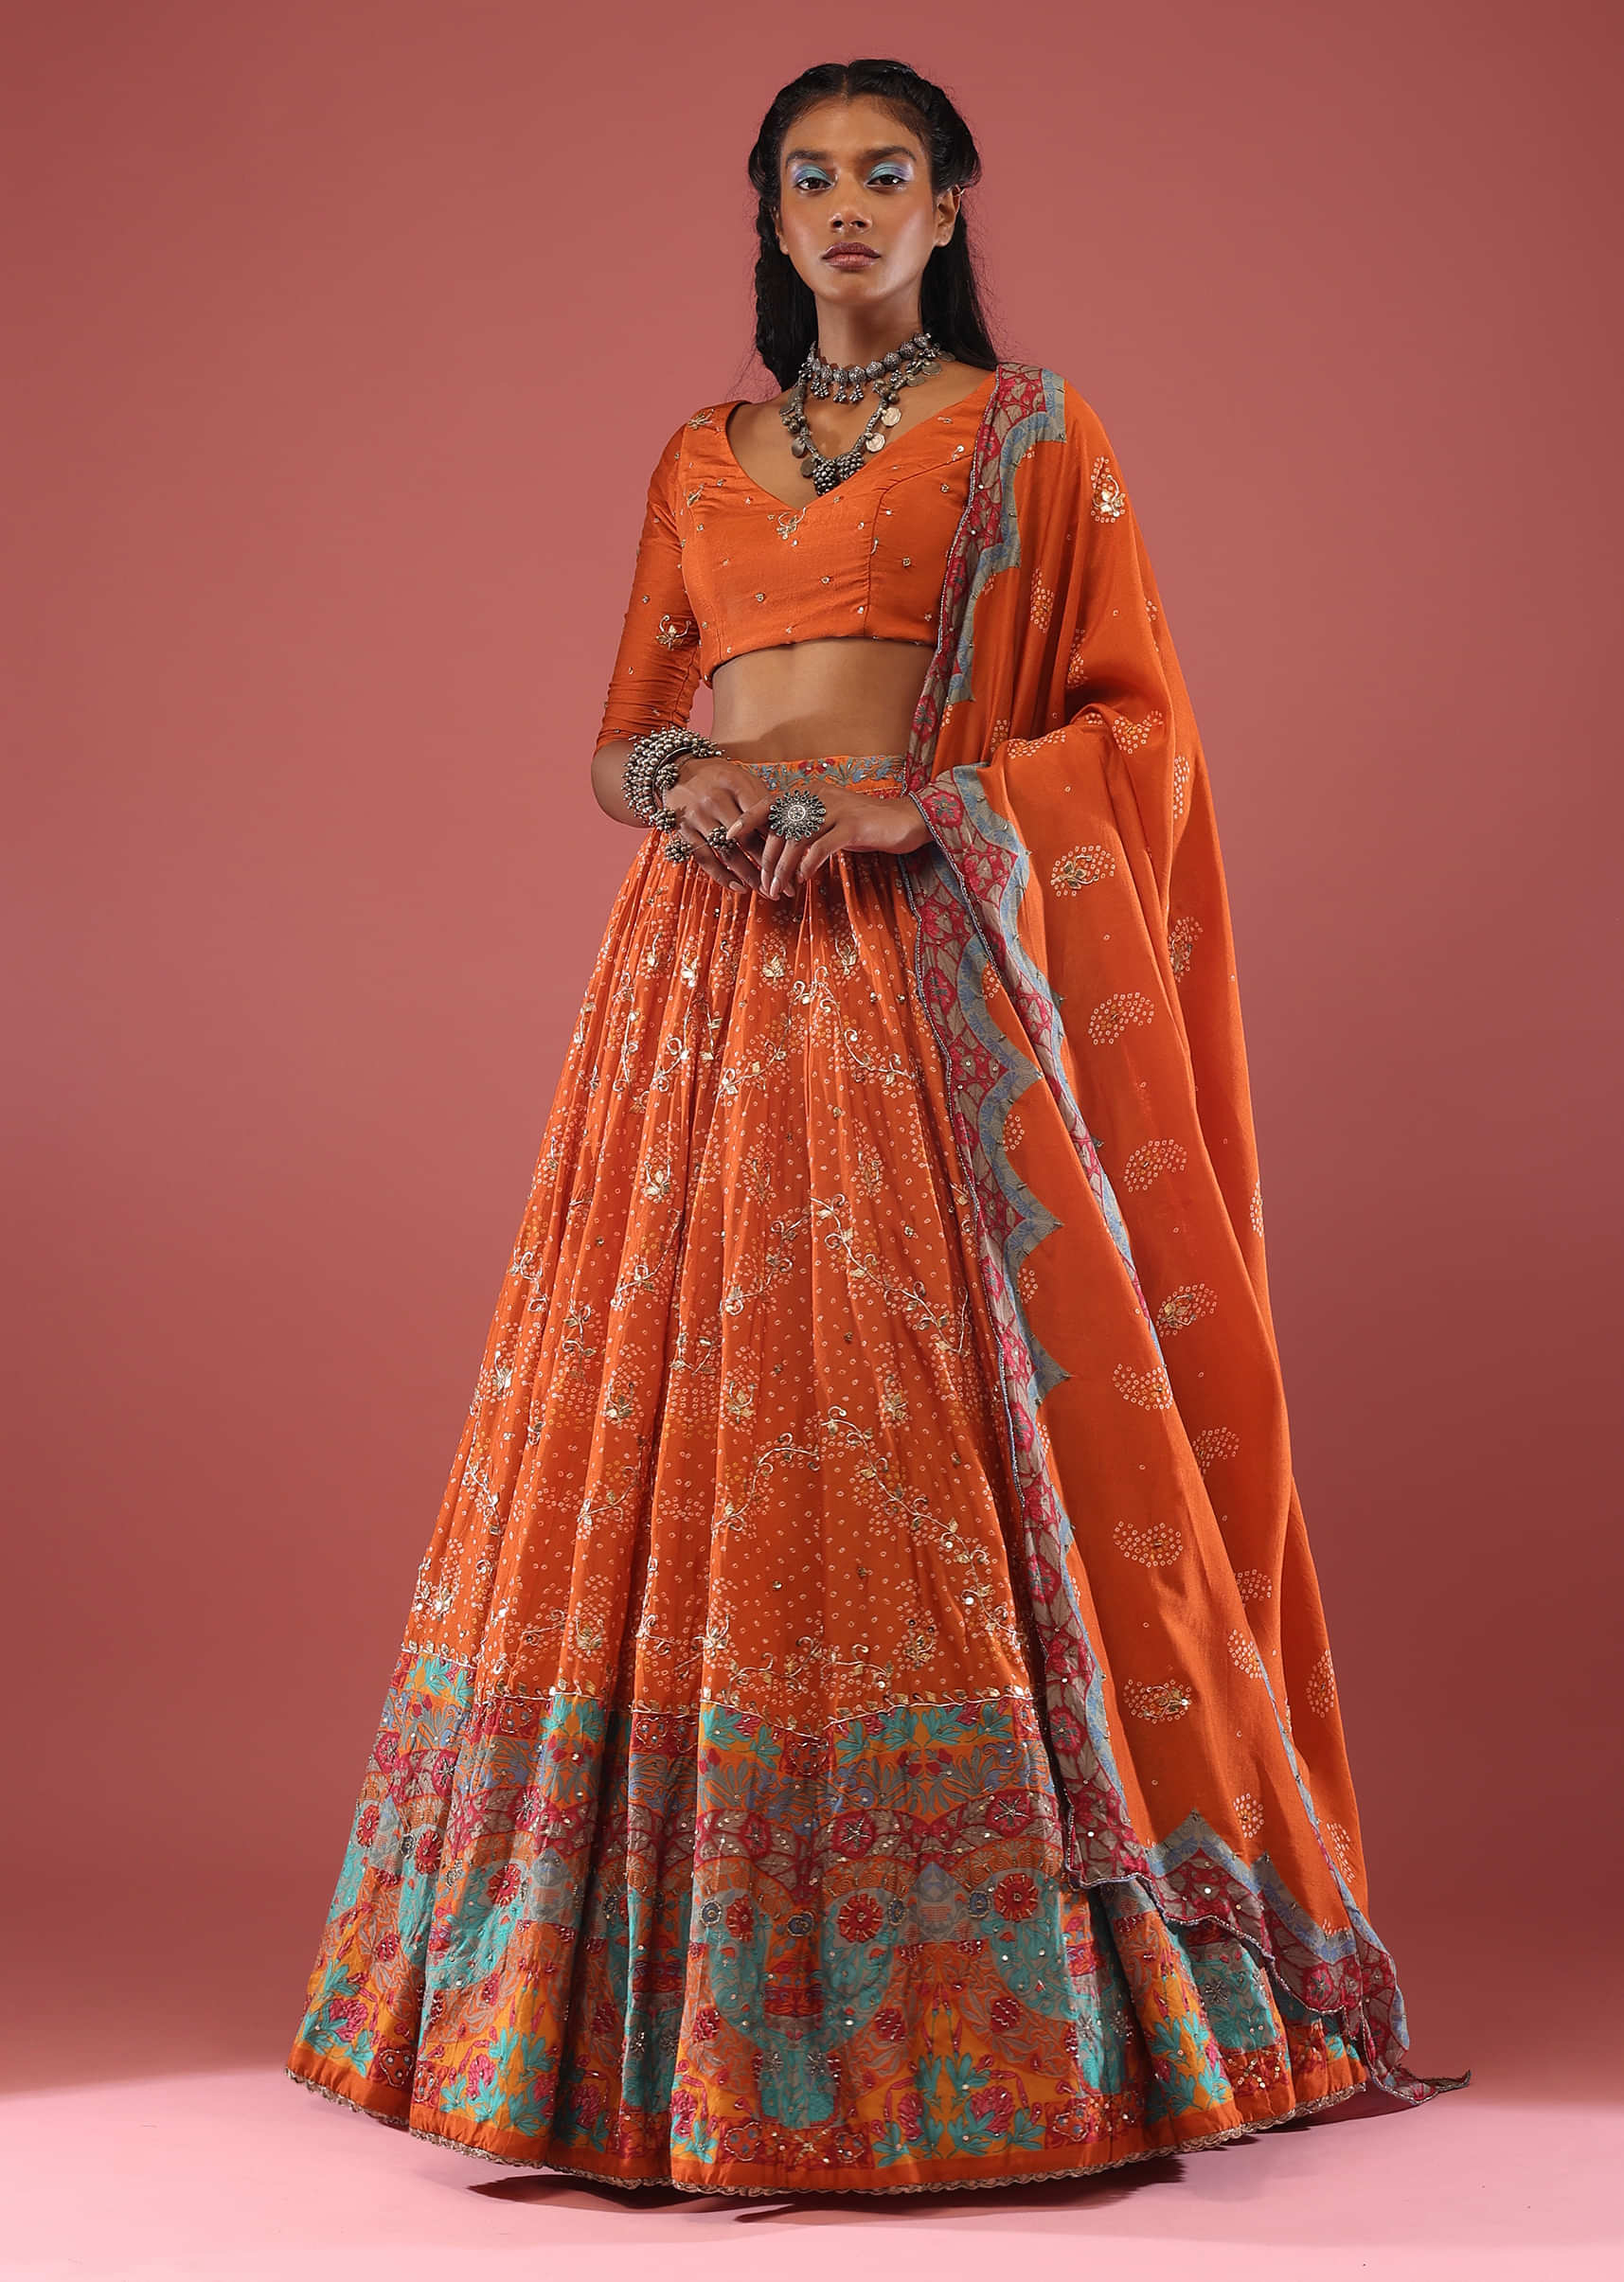 Orange Silk Bandhni Print Lehenga With Elaborate Hand Embroidery Including Gota Patti, Cutdana, And Sequins.